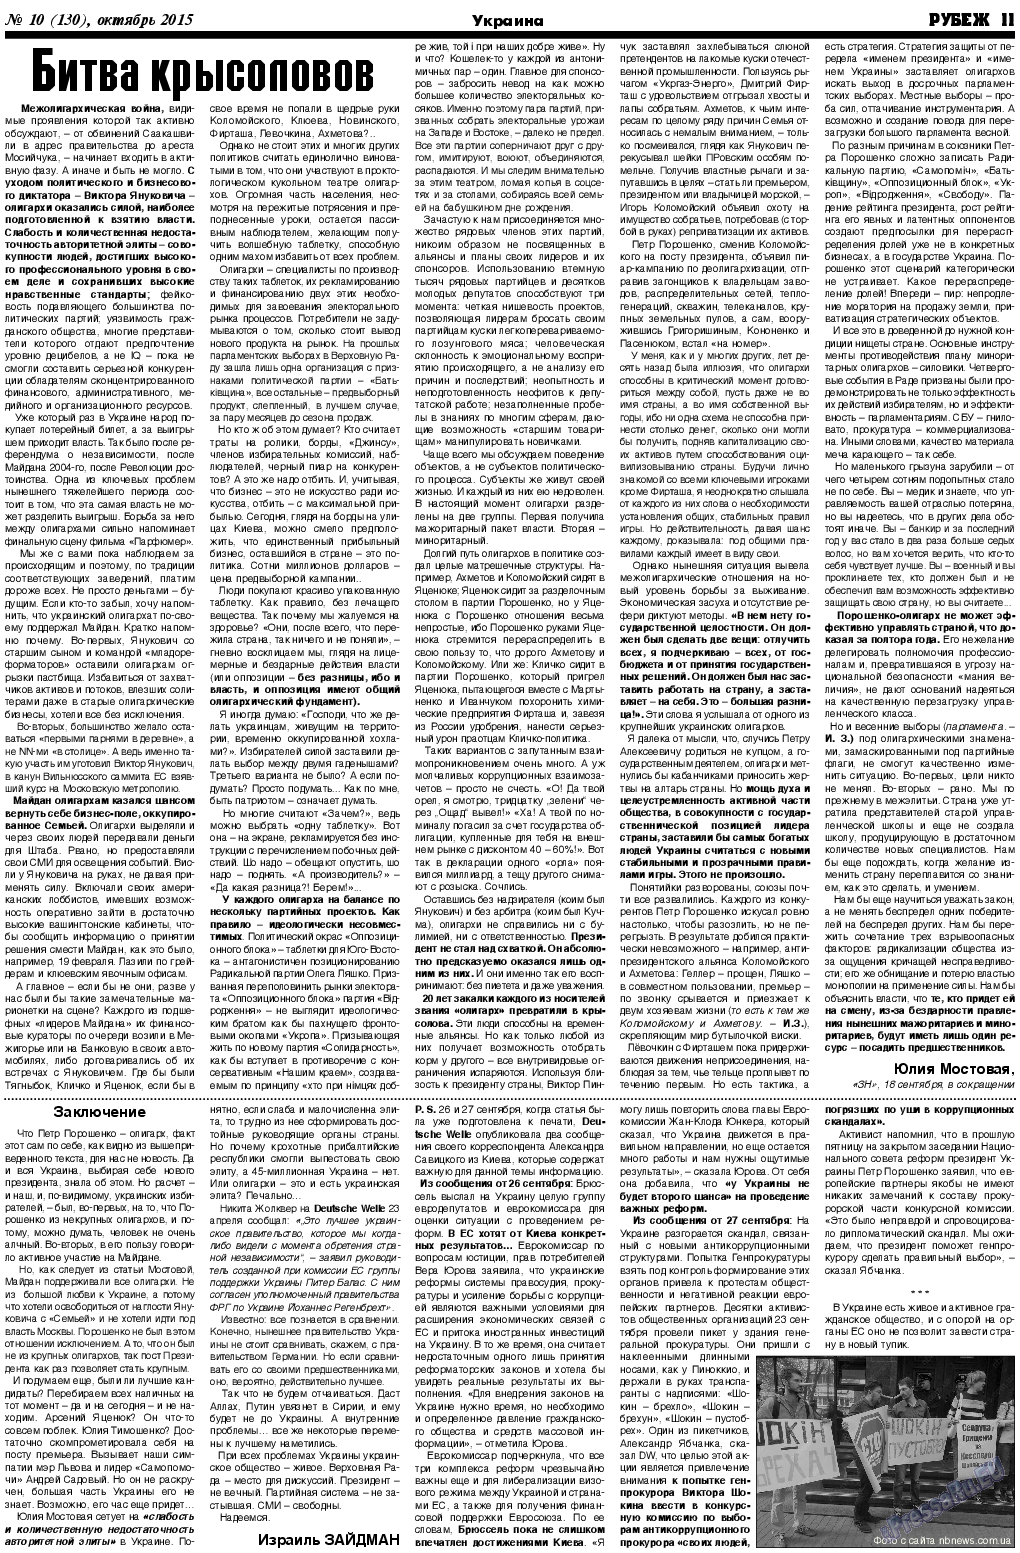 Рубеж, газета. 2015 №10 стр.11